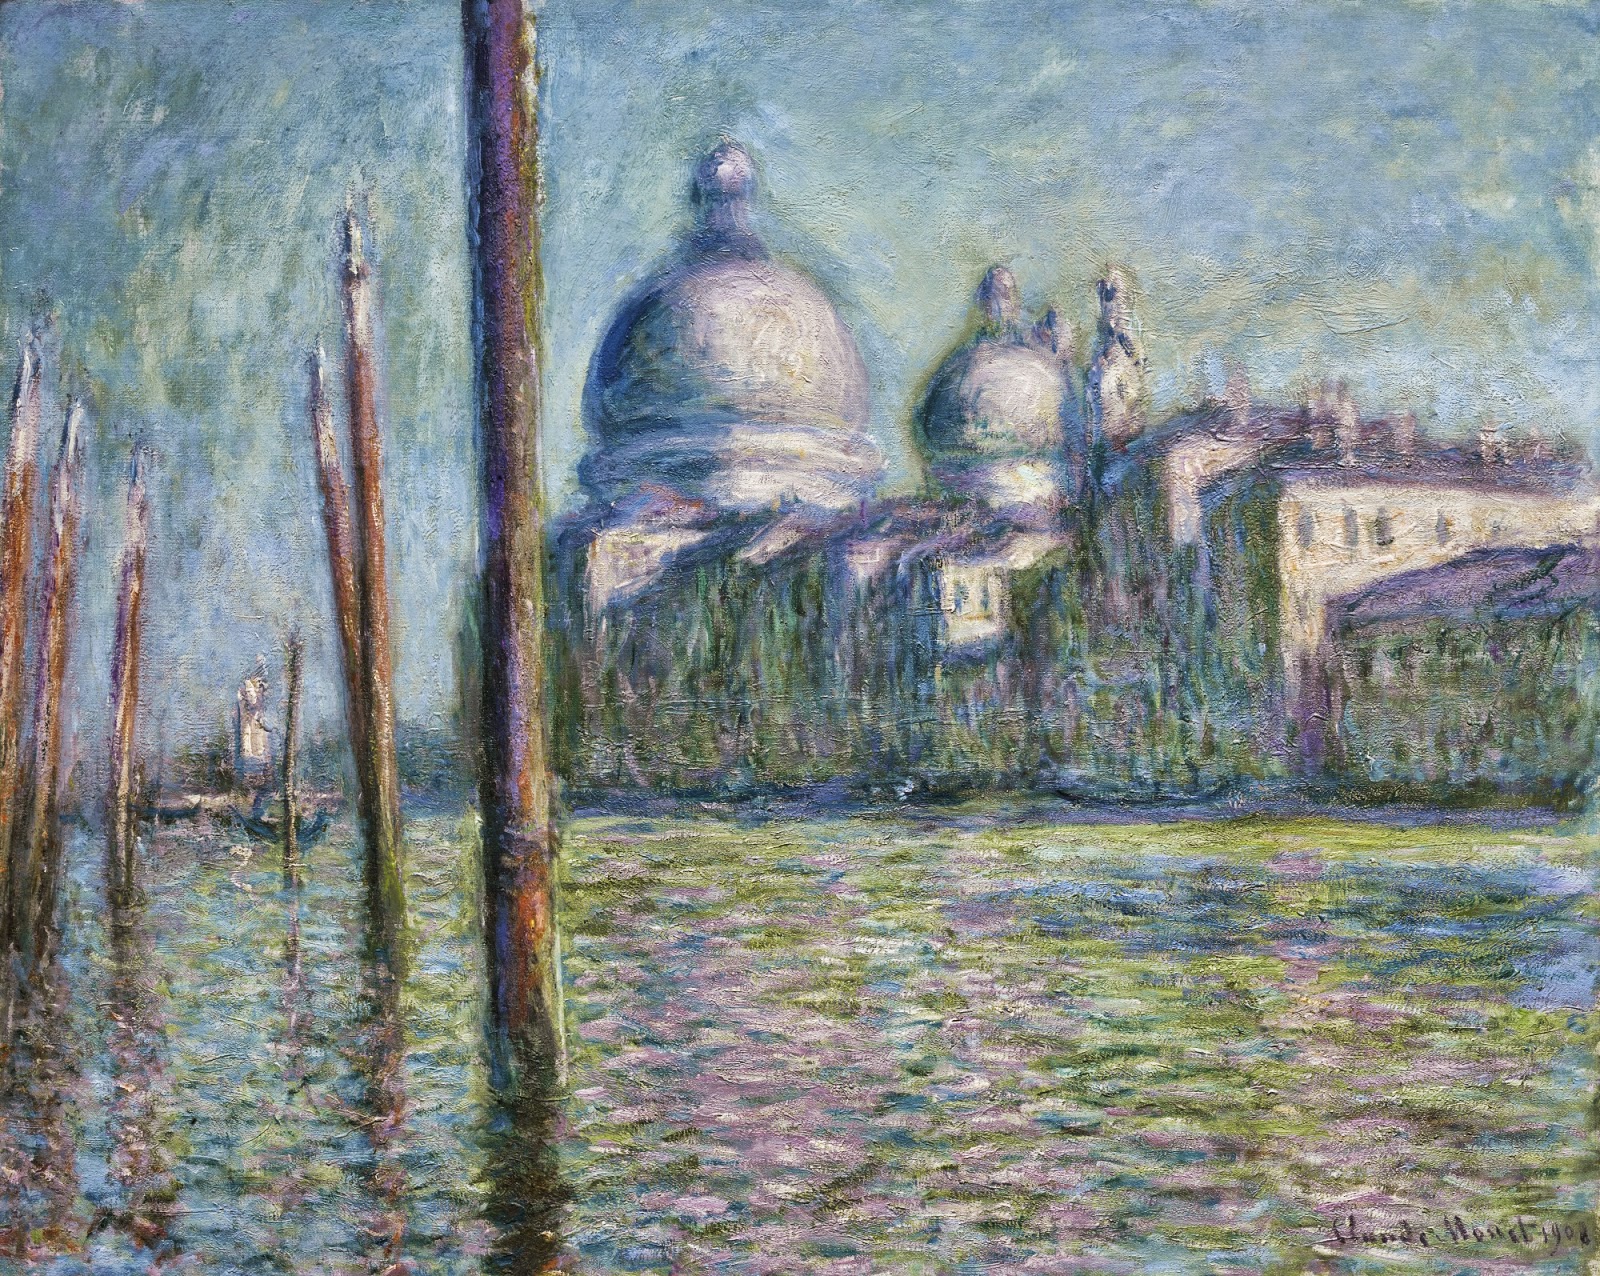 Claude+Monet-1840-1926 (510).jpg